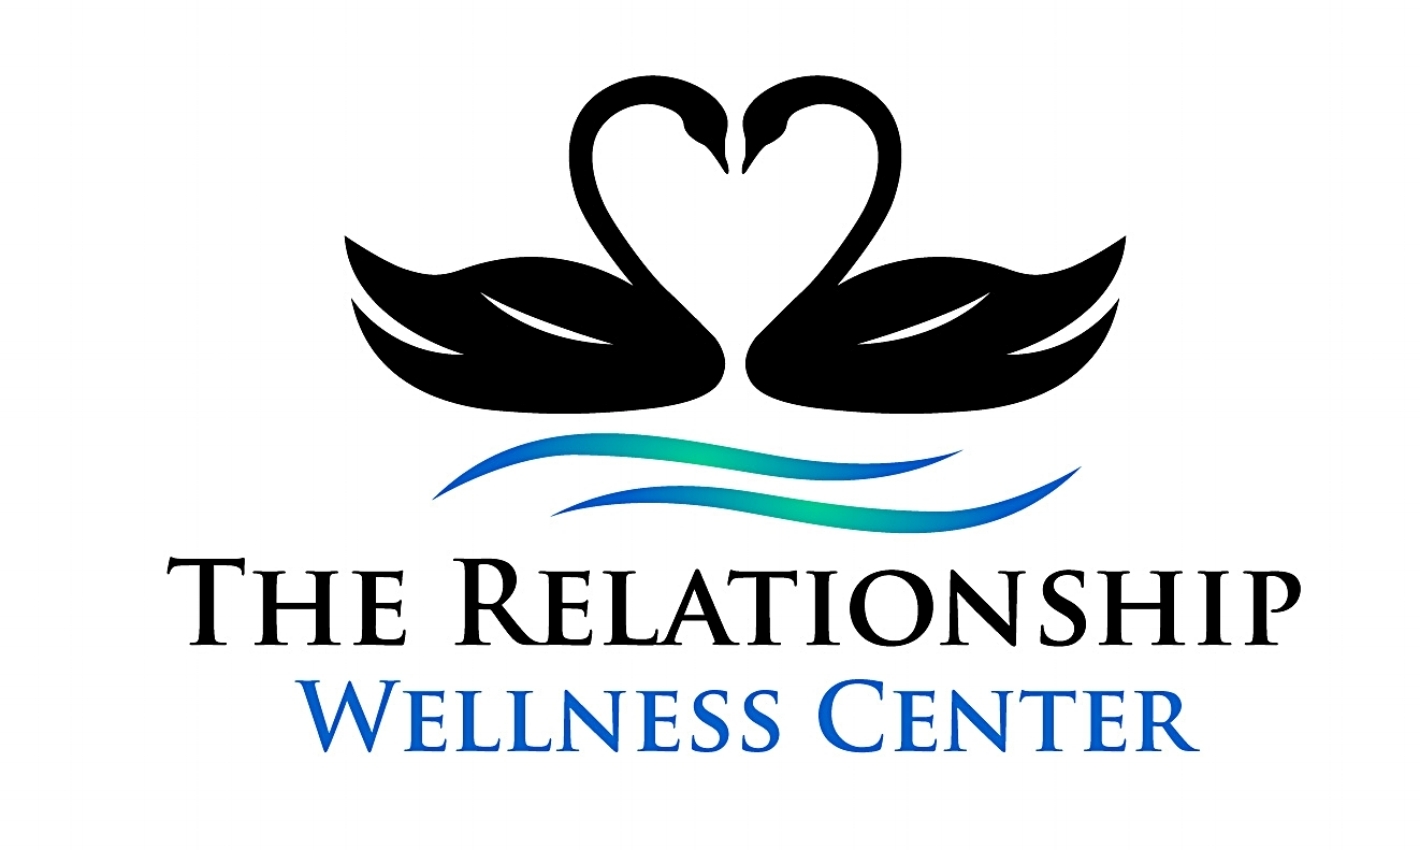 The Relationship Wellness Center